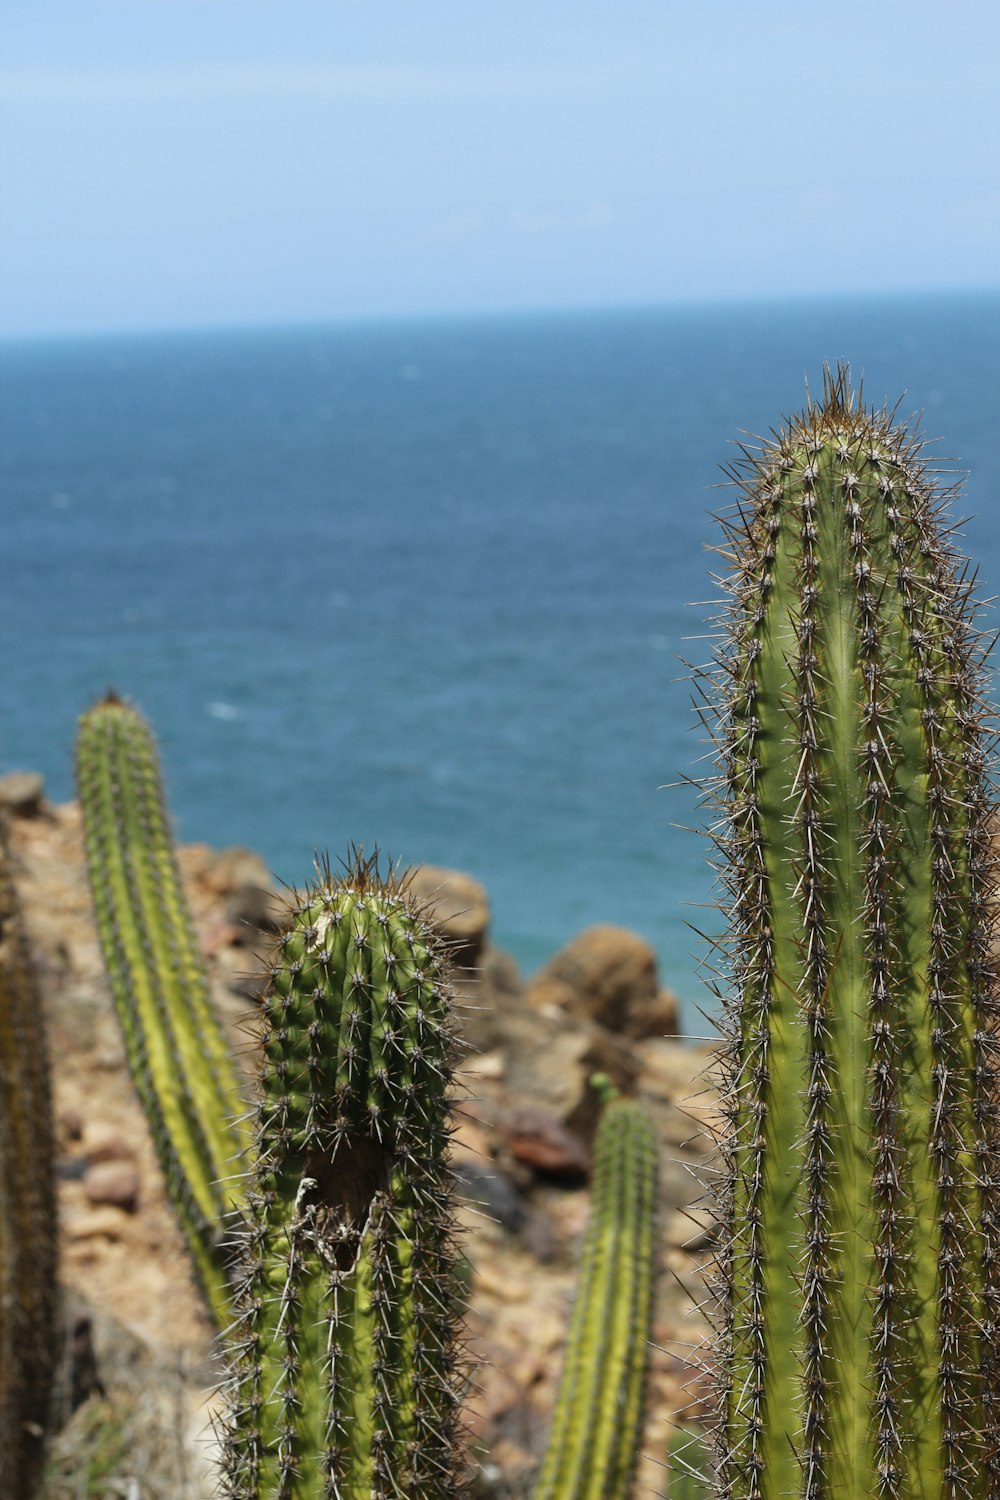 green cactus near blue sea during daytime